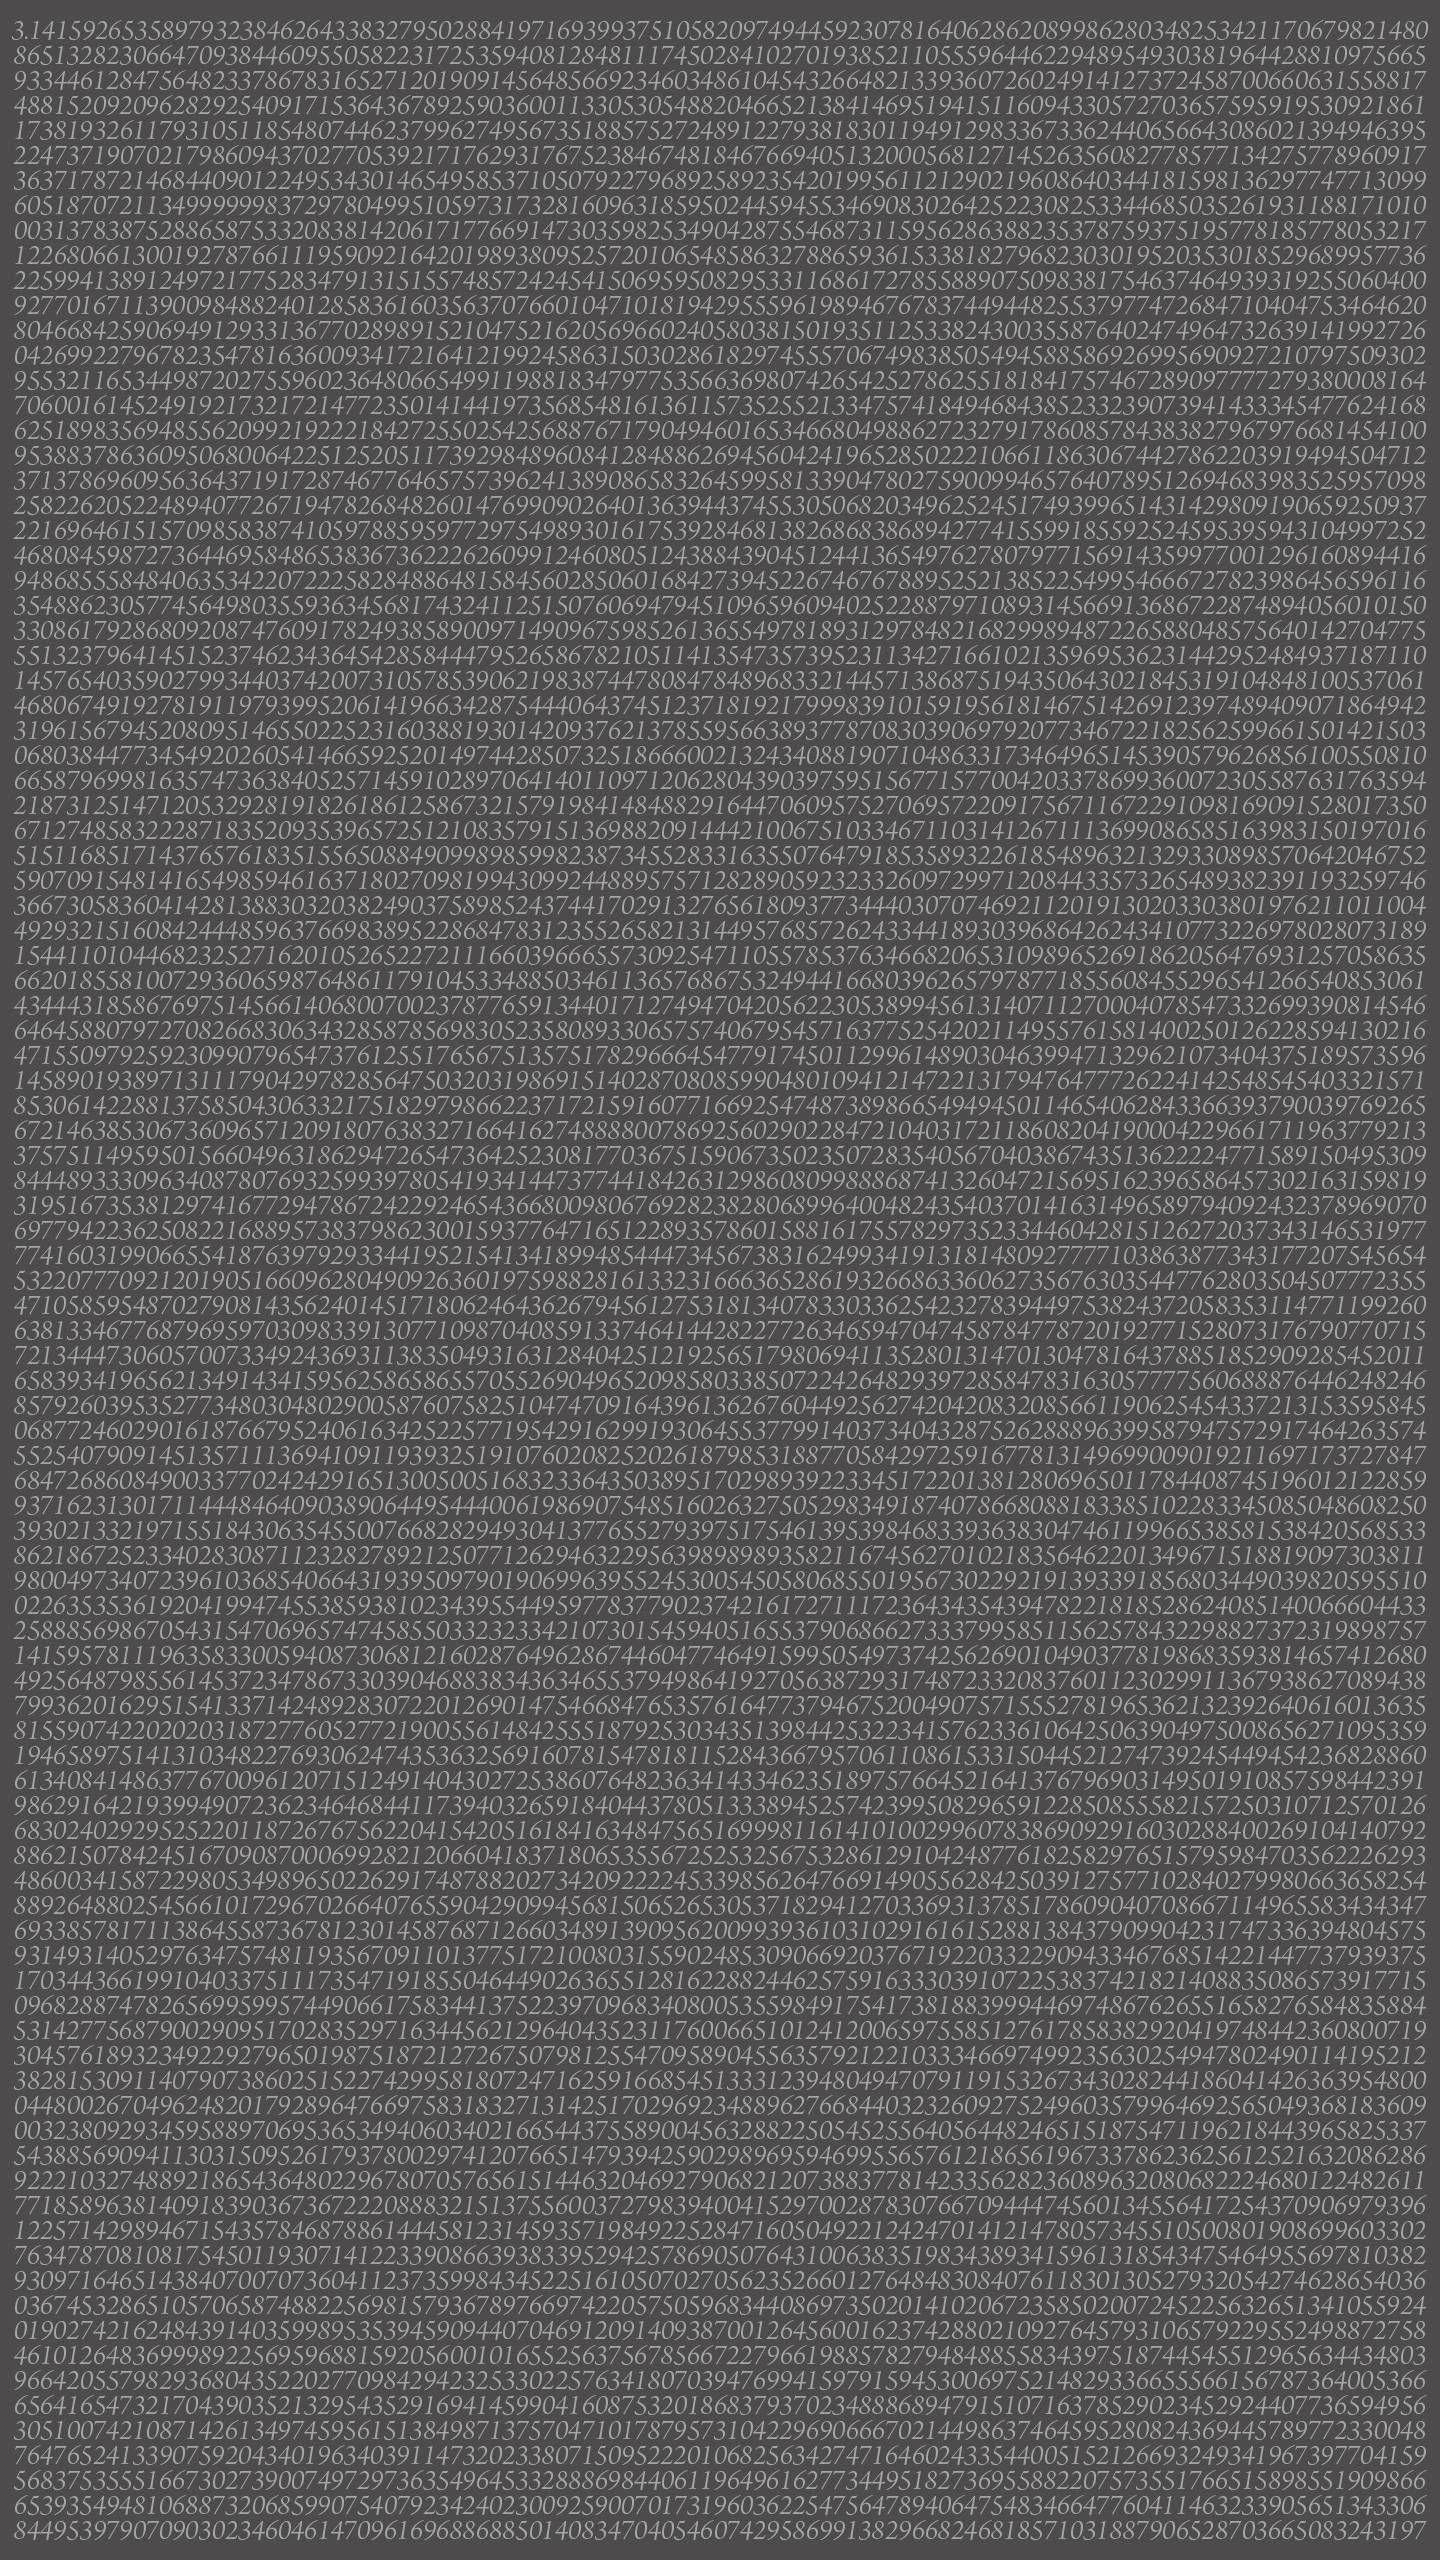 Simplistic phone wallpaper I made. Pi to 10807 digits. 1440x2560